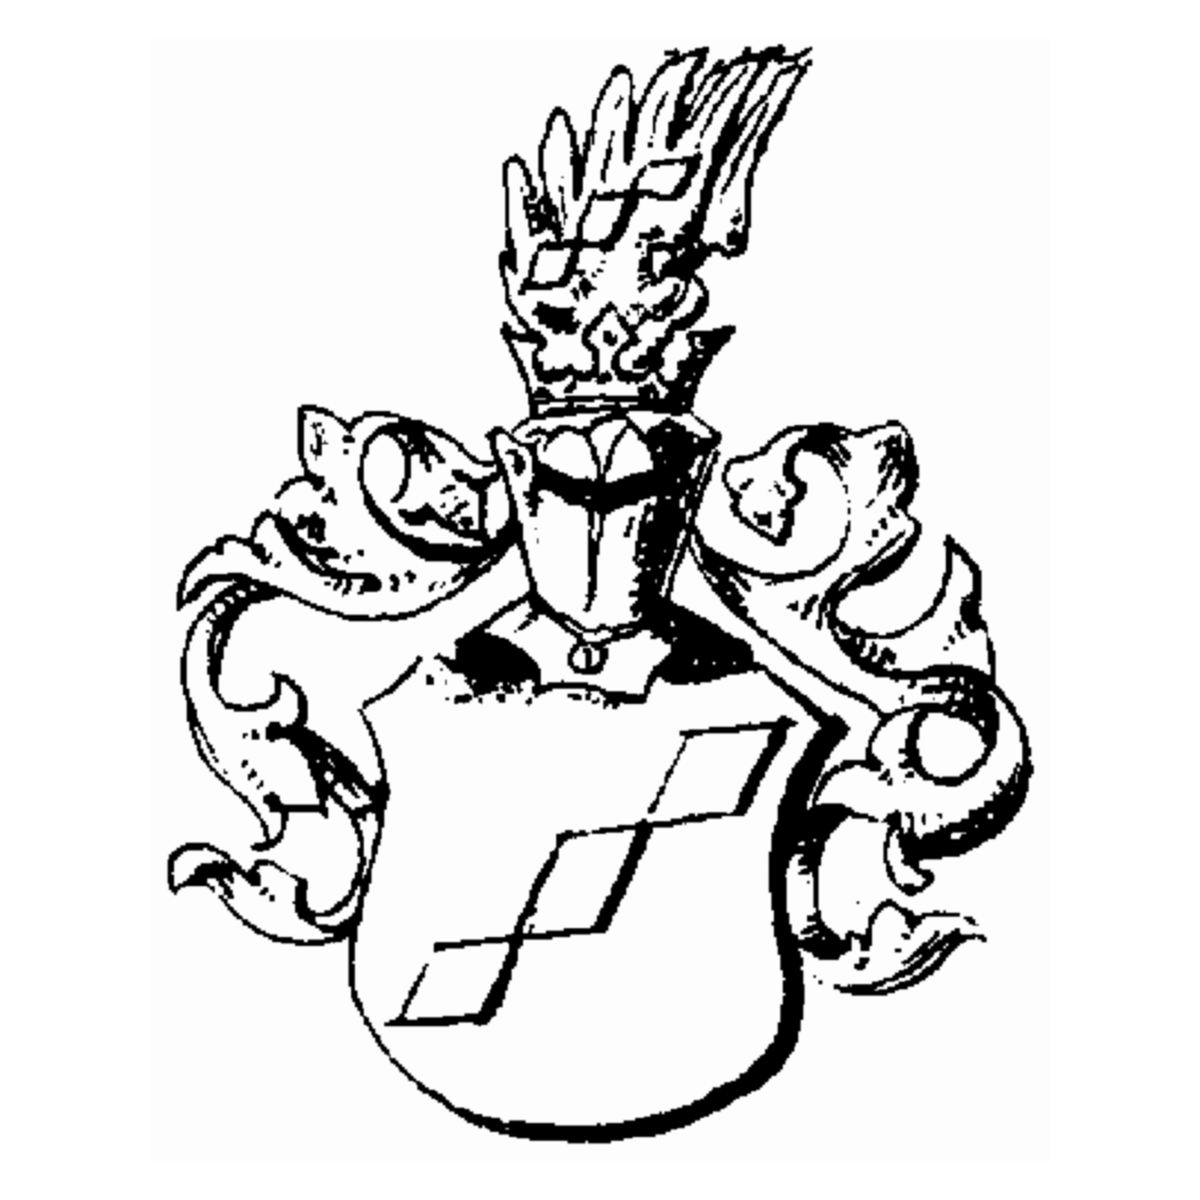 Coat of arms of family Stetfurt